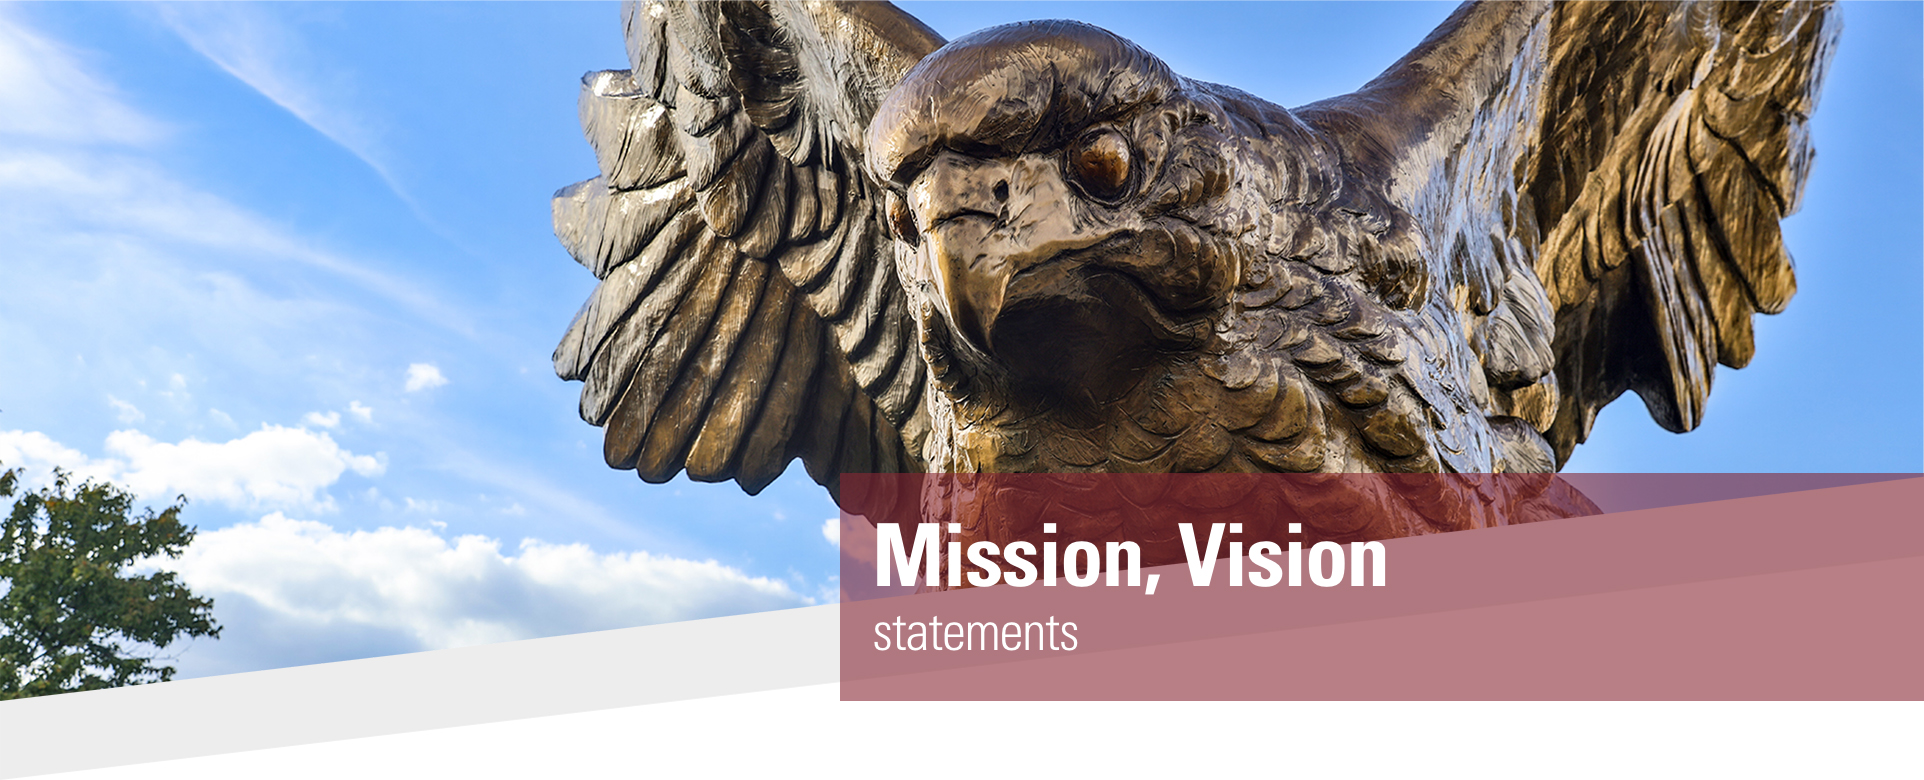 Mission, Vision statements